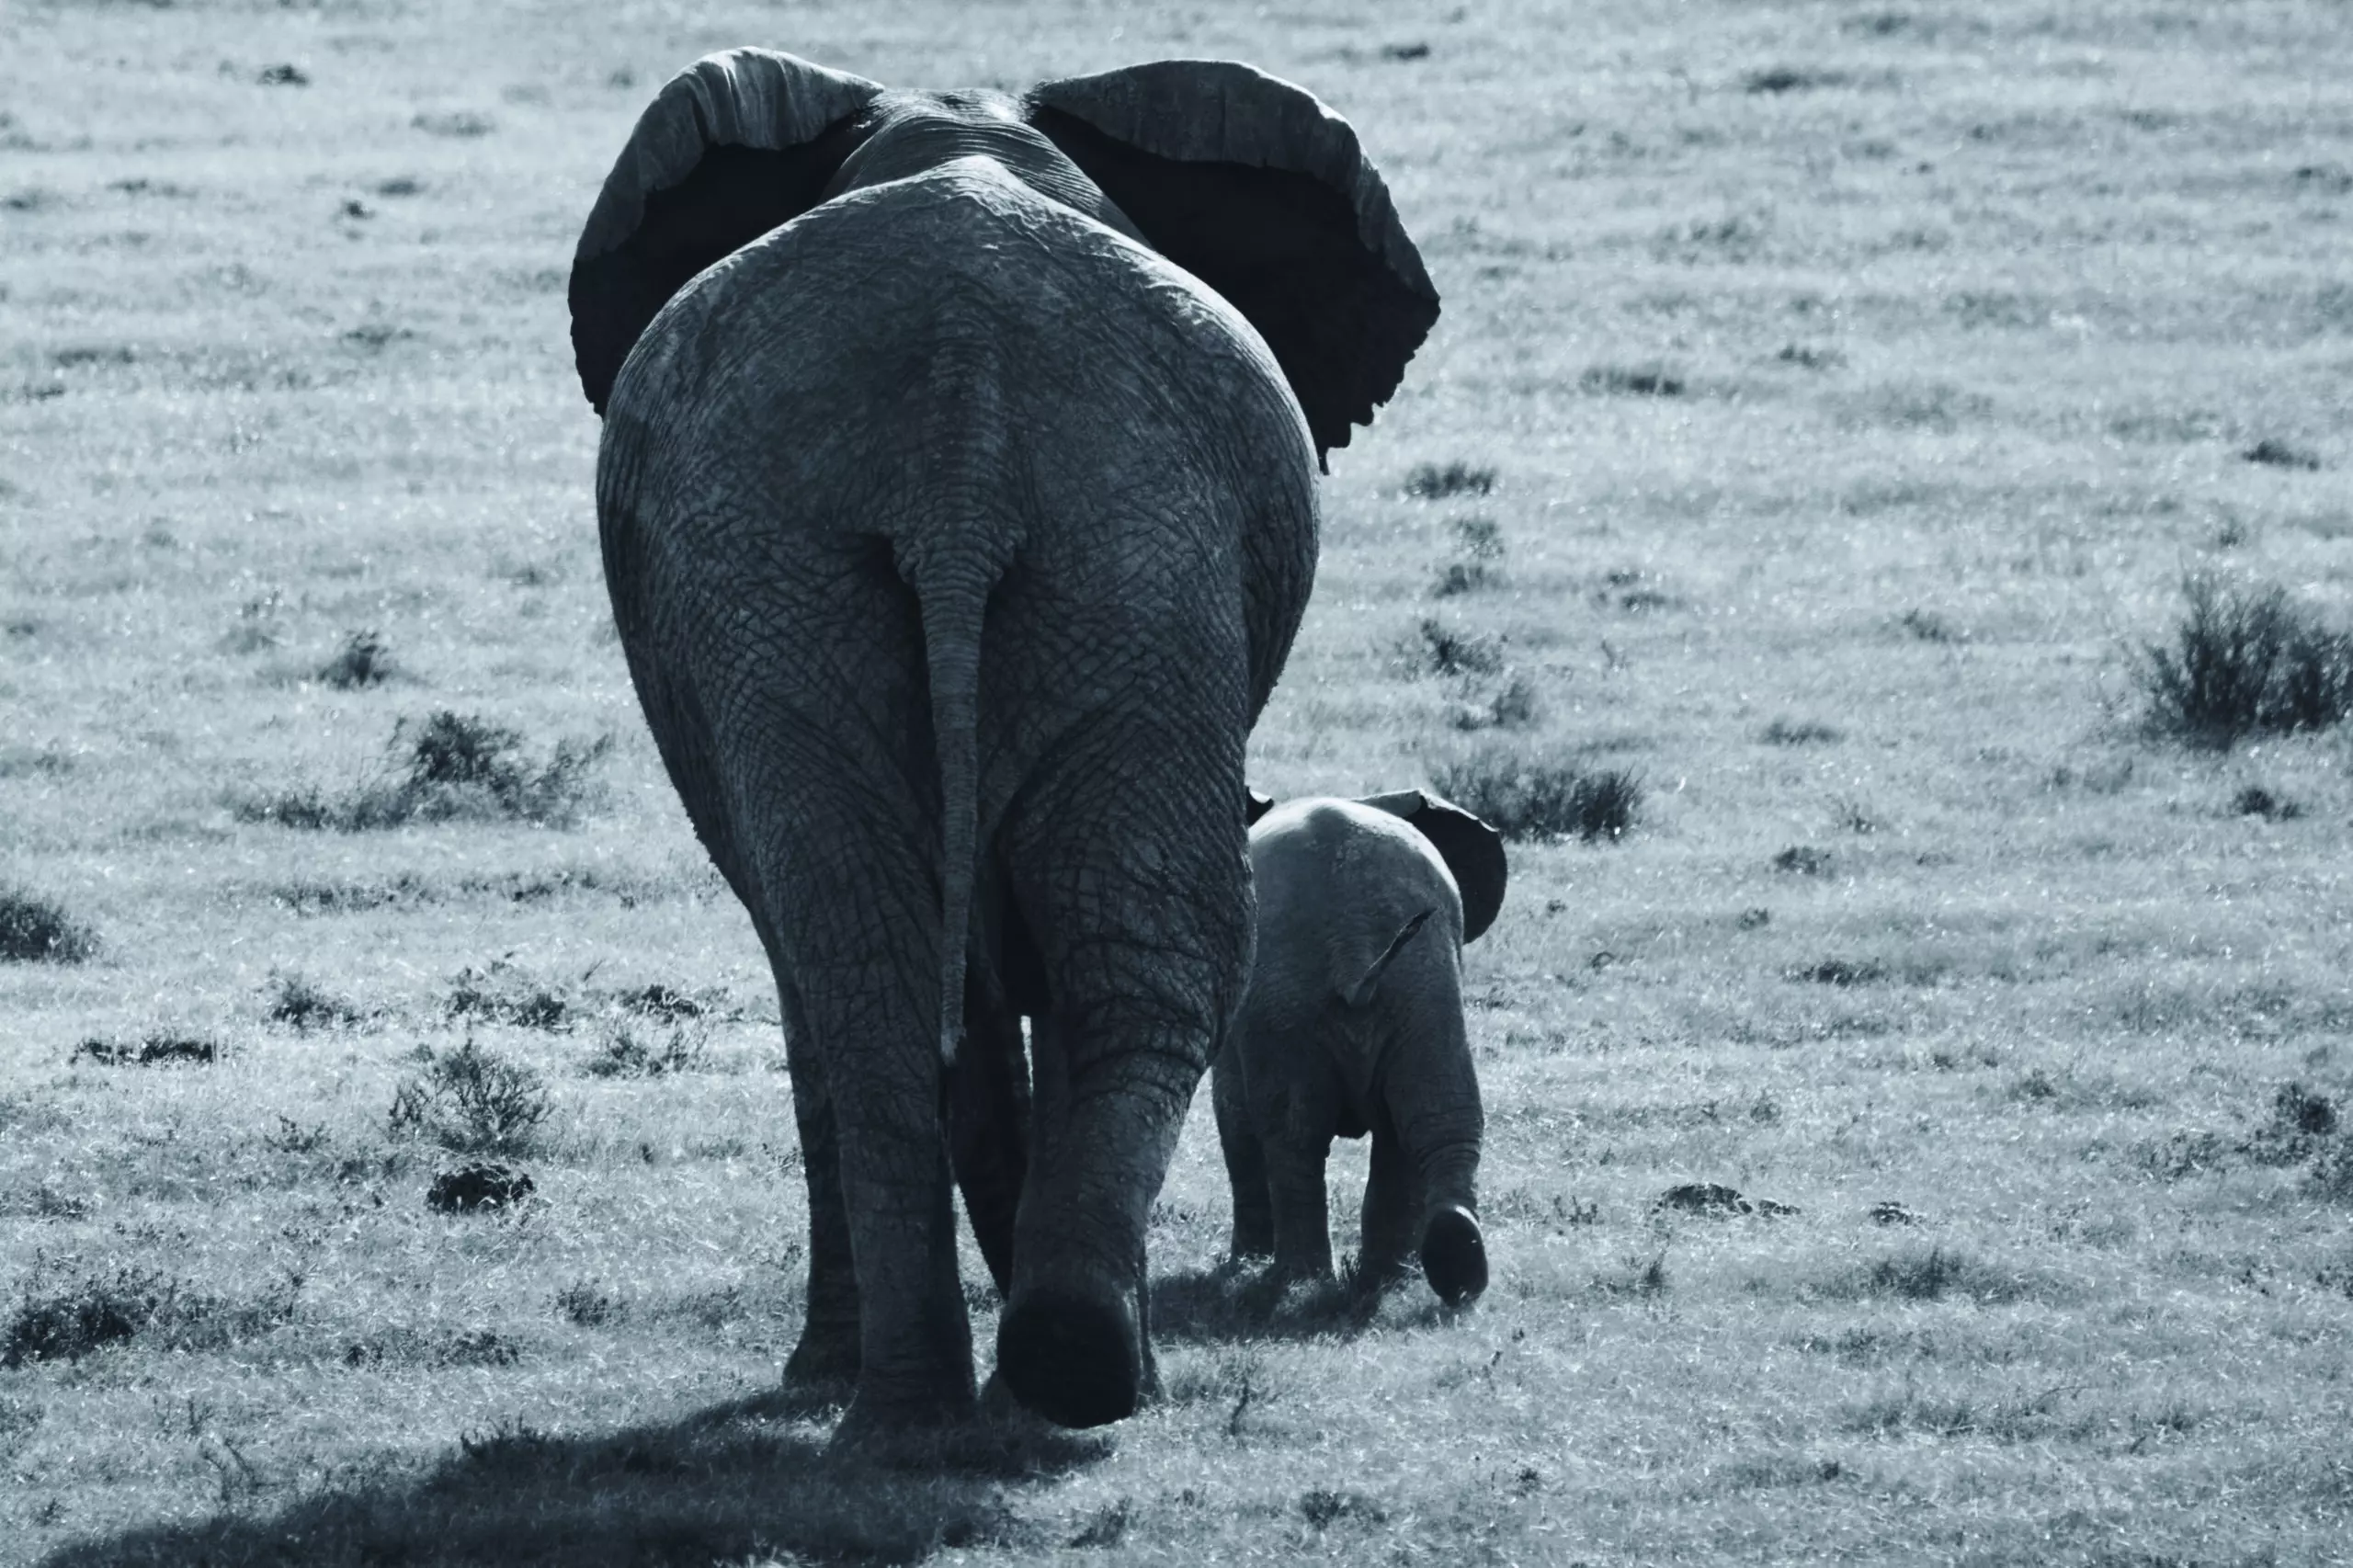 Wandbild (3446) Elephant 14 präsentiert: Tiere,Wildtiere,Aus Afrika